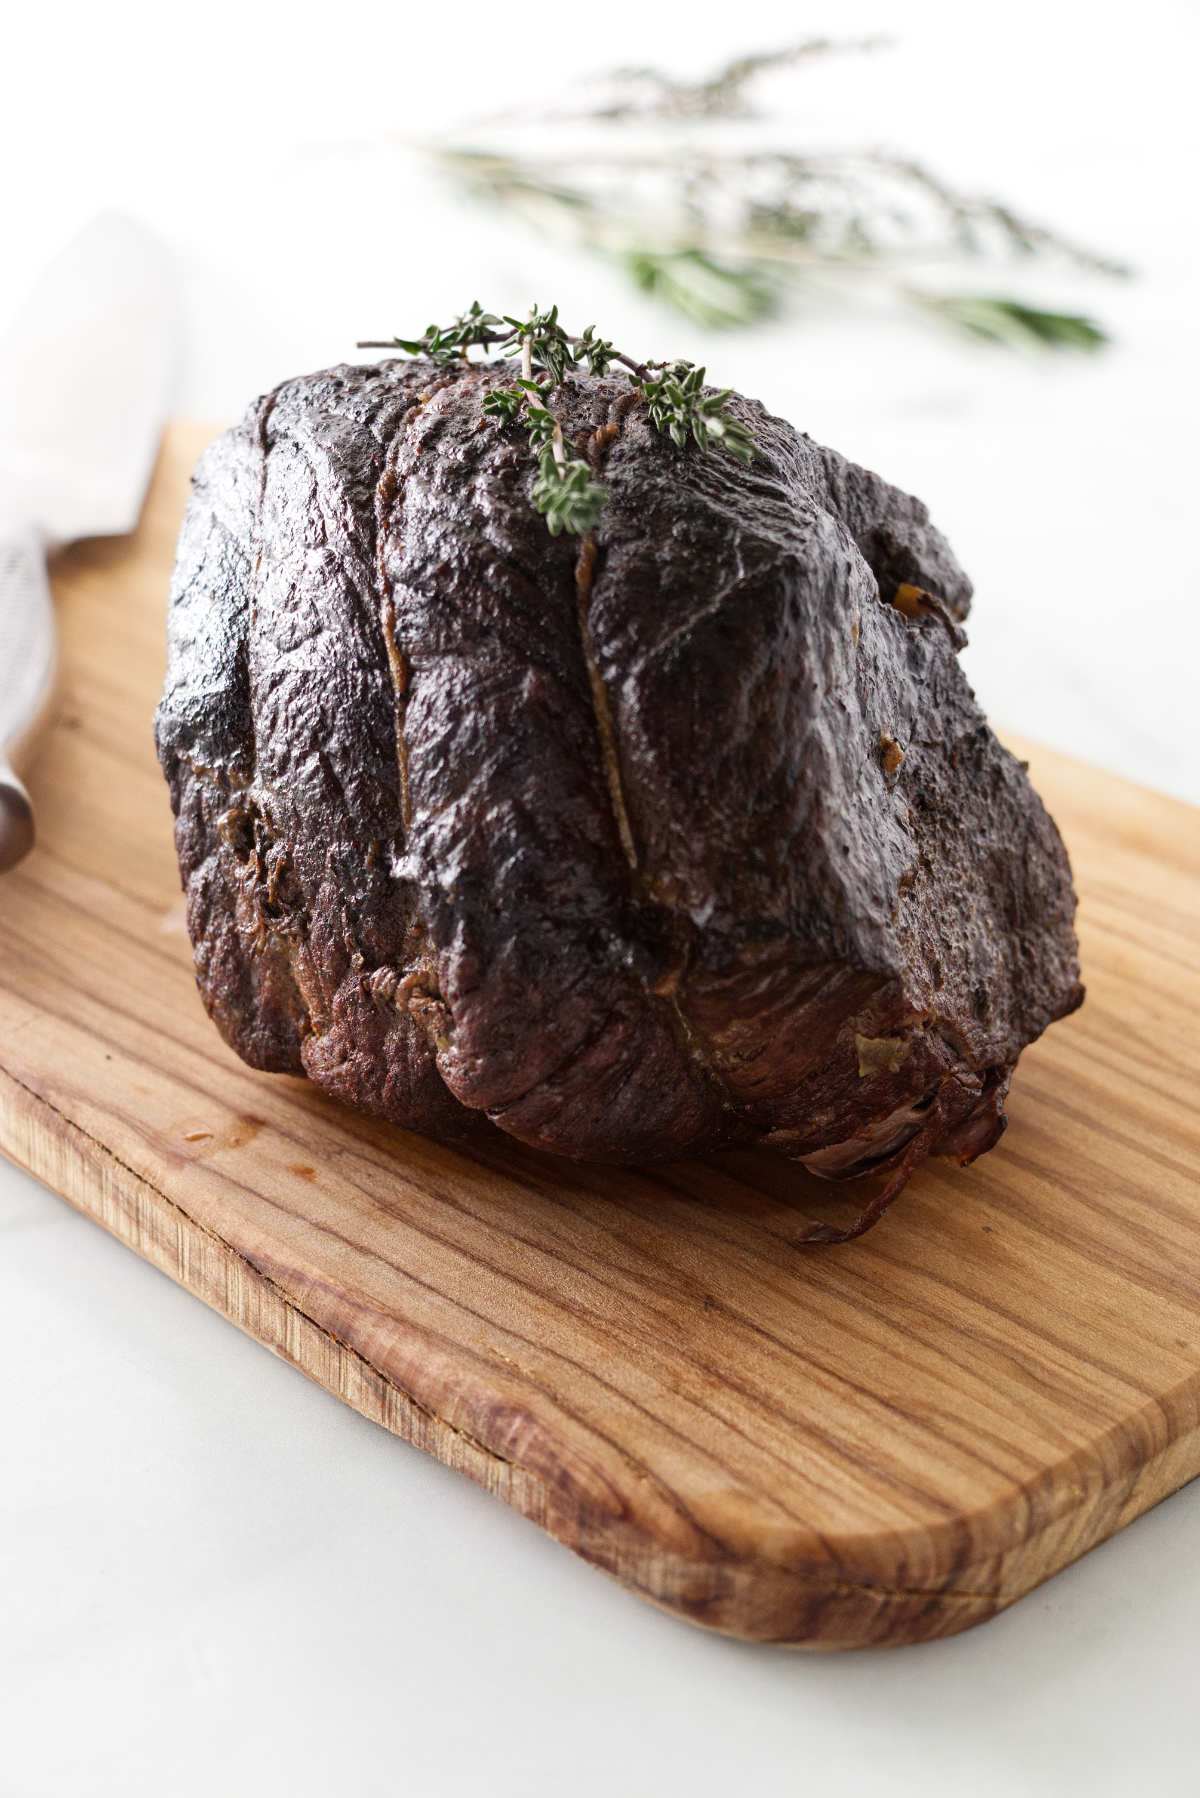 A sirloin roast on a cutting board.